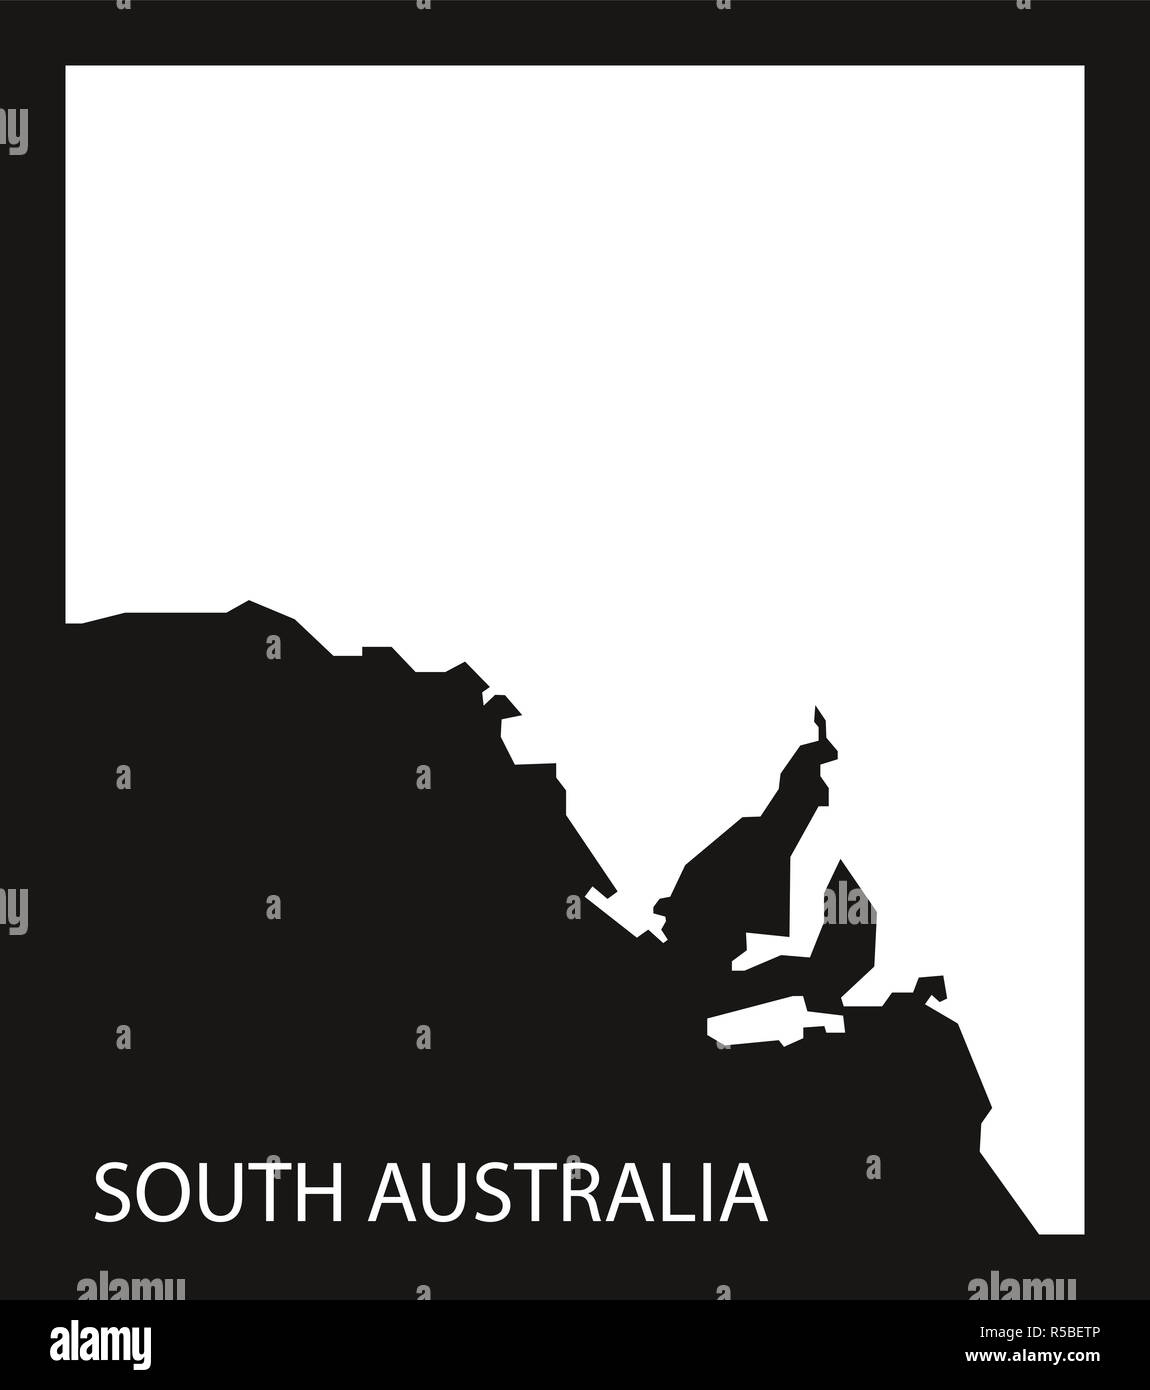 South Australia map black inverted silhouette illustration Stock Photo